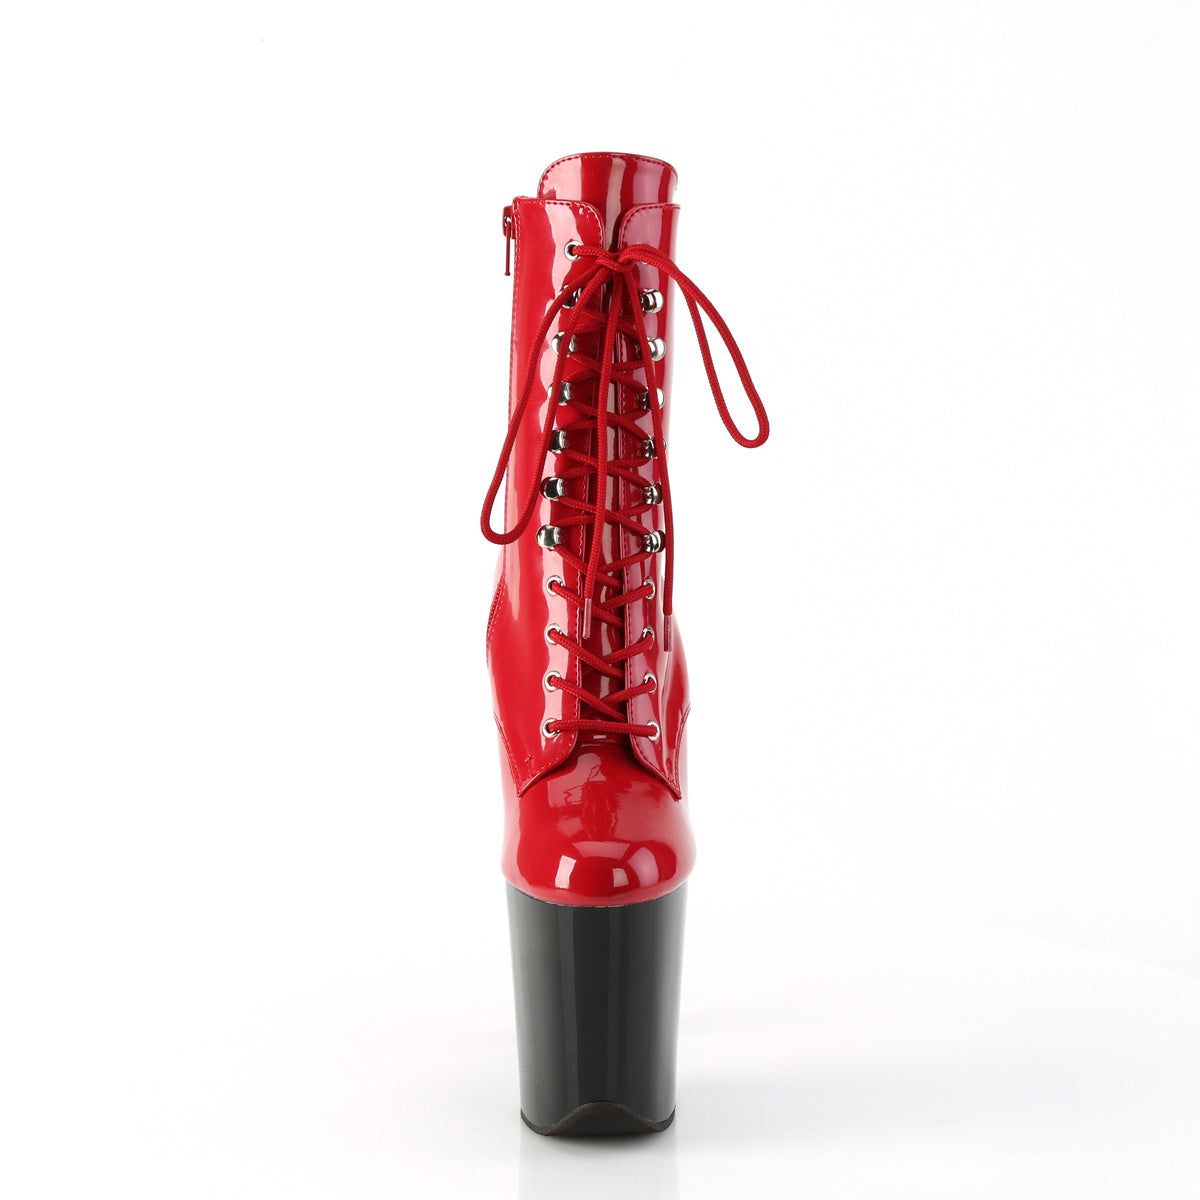 8 Inch Heel FLAMINGO-1020 Red Patent Black